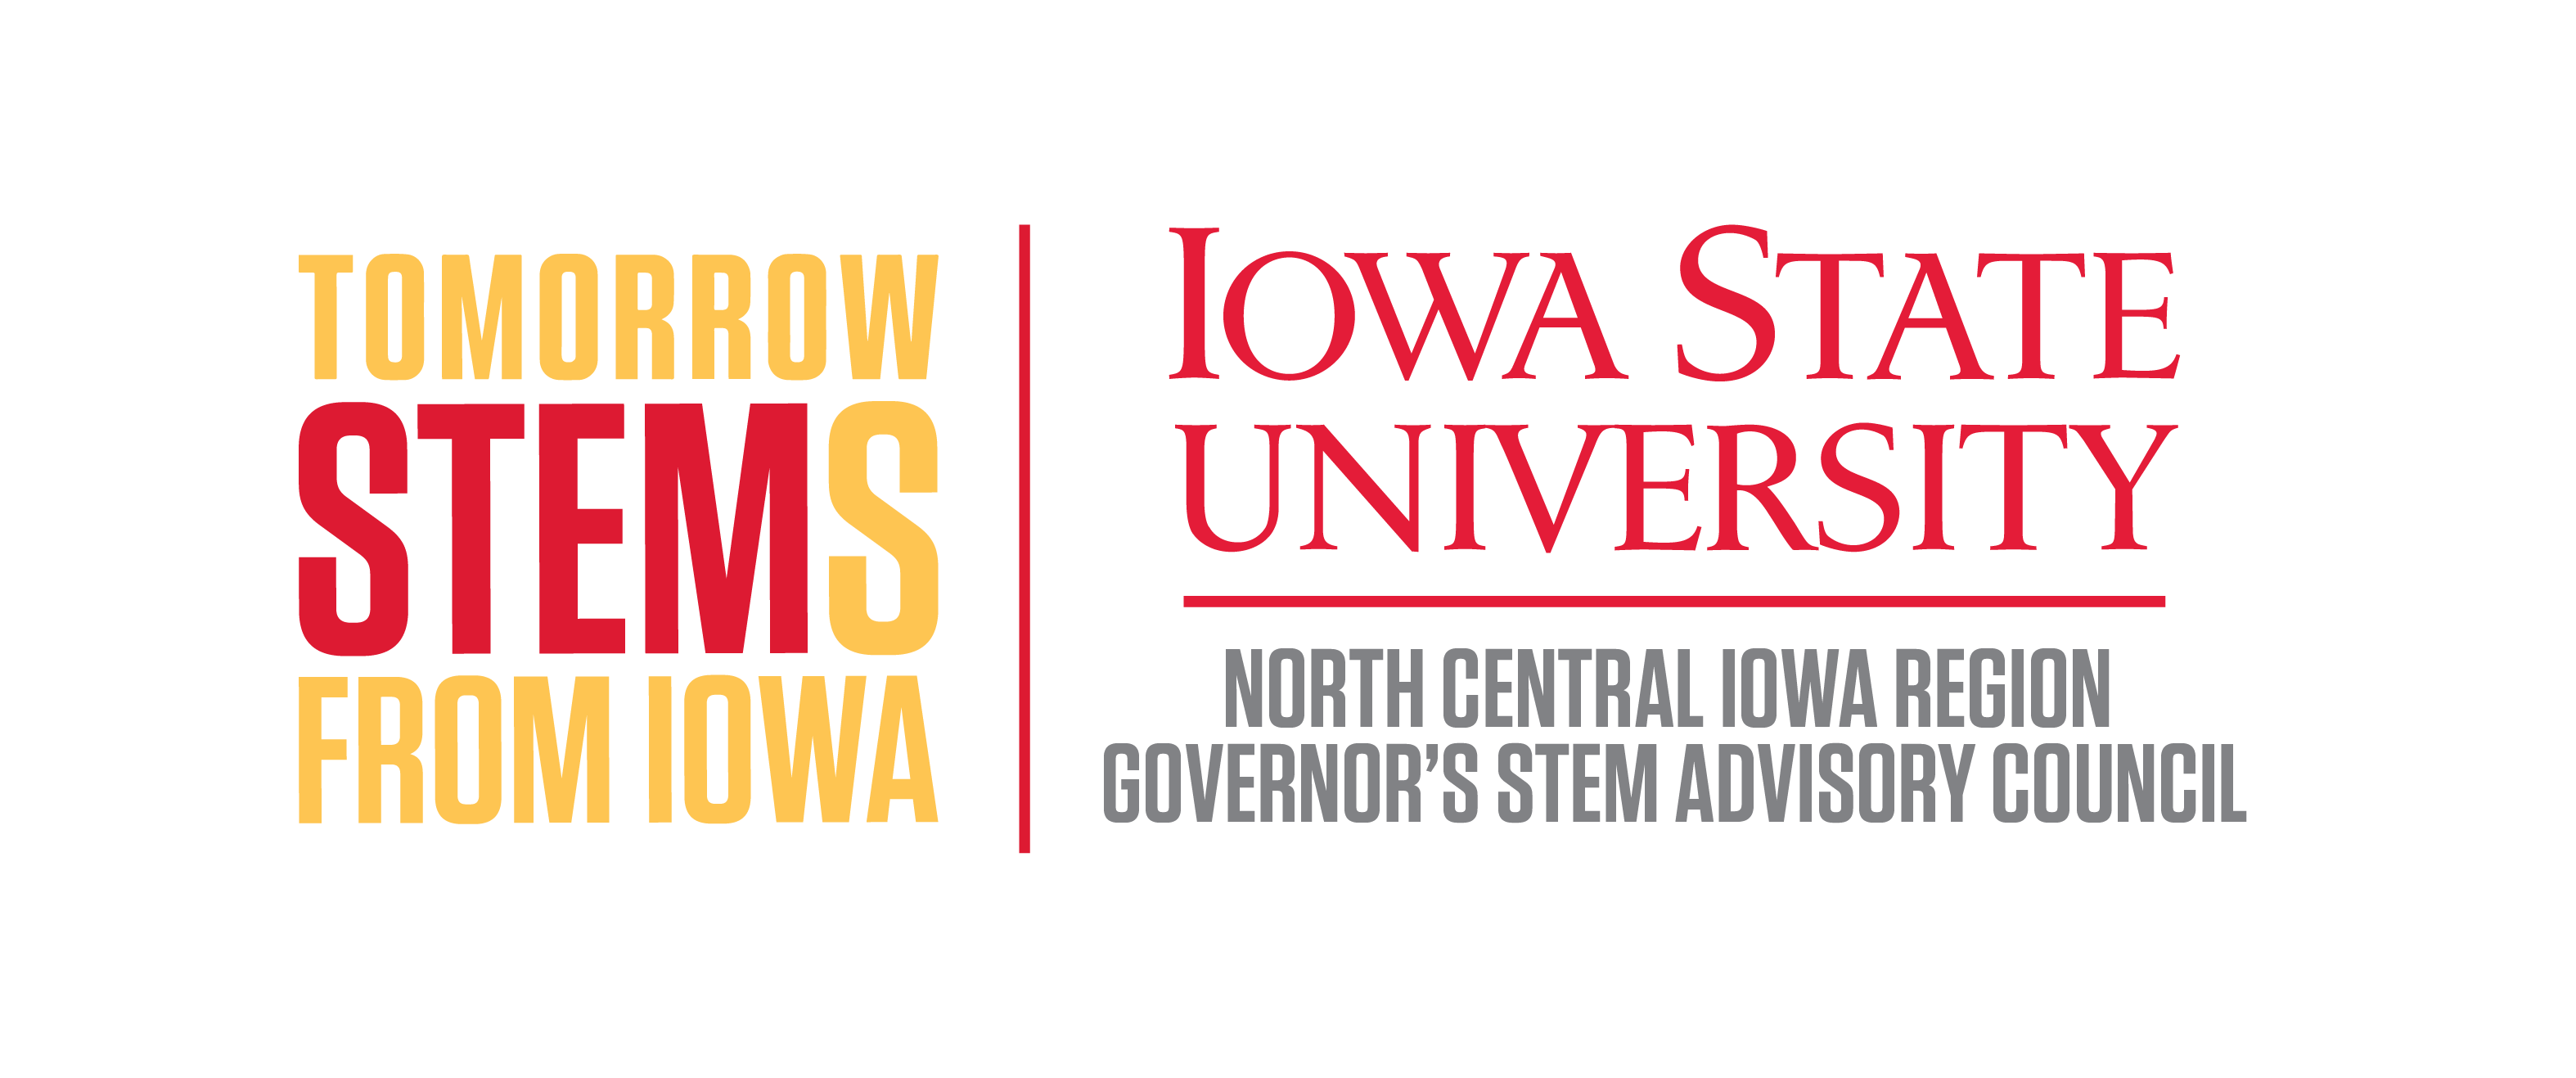 North Central Iowa Region Governor's STEM Advisory Council